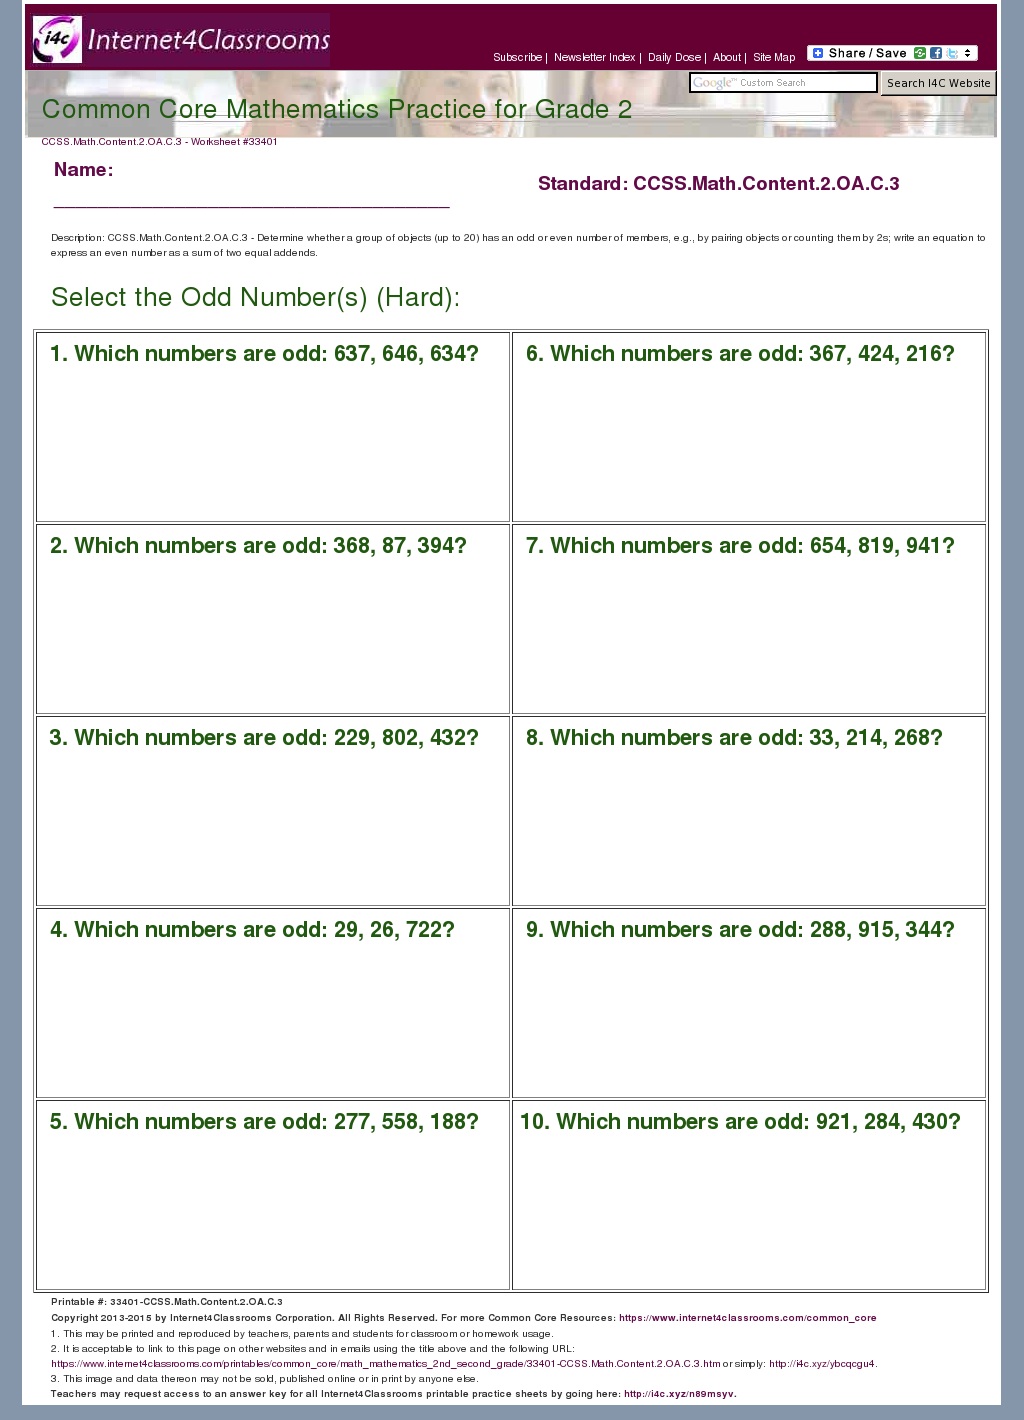 Description Download Worksheet 33401 CCSS Math Content 2 OA C 3